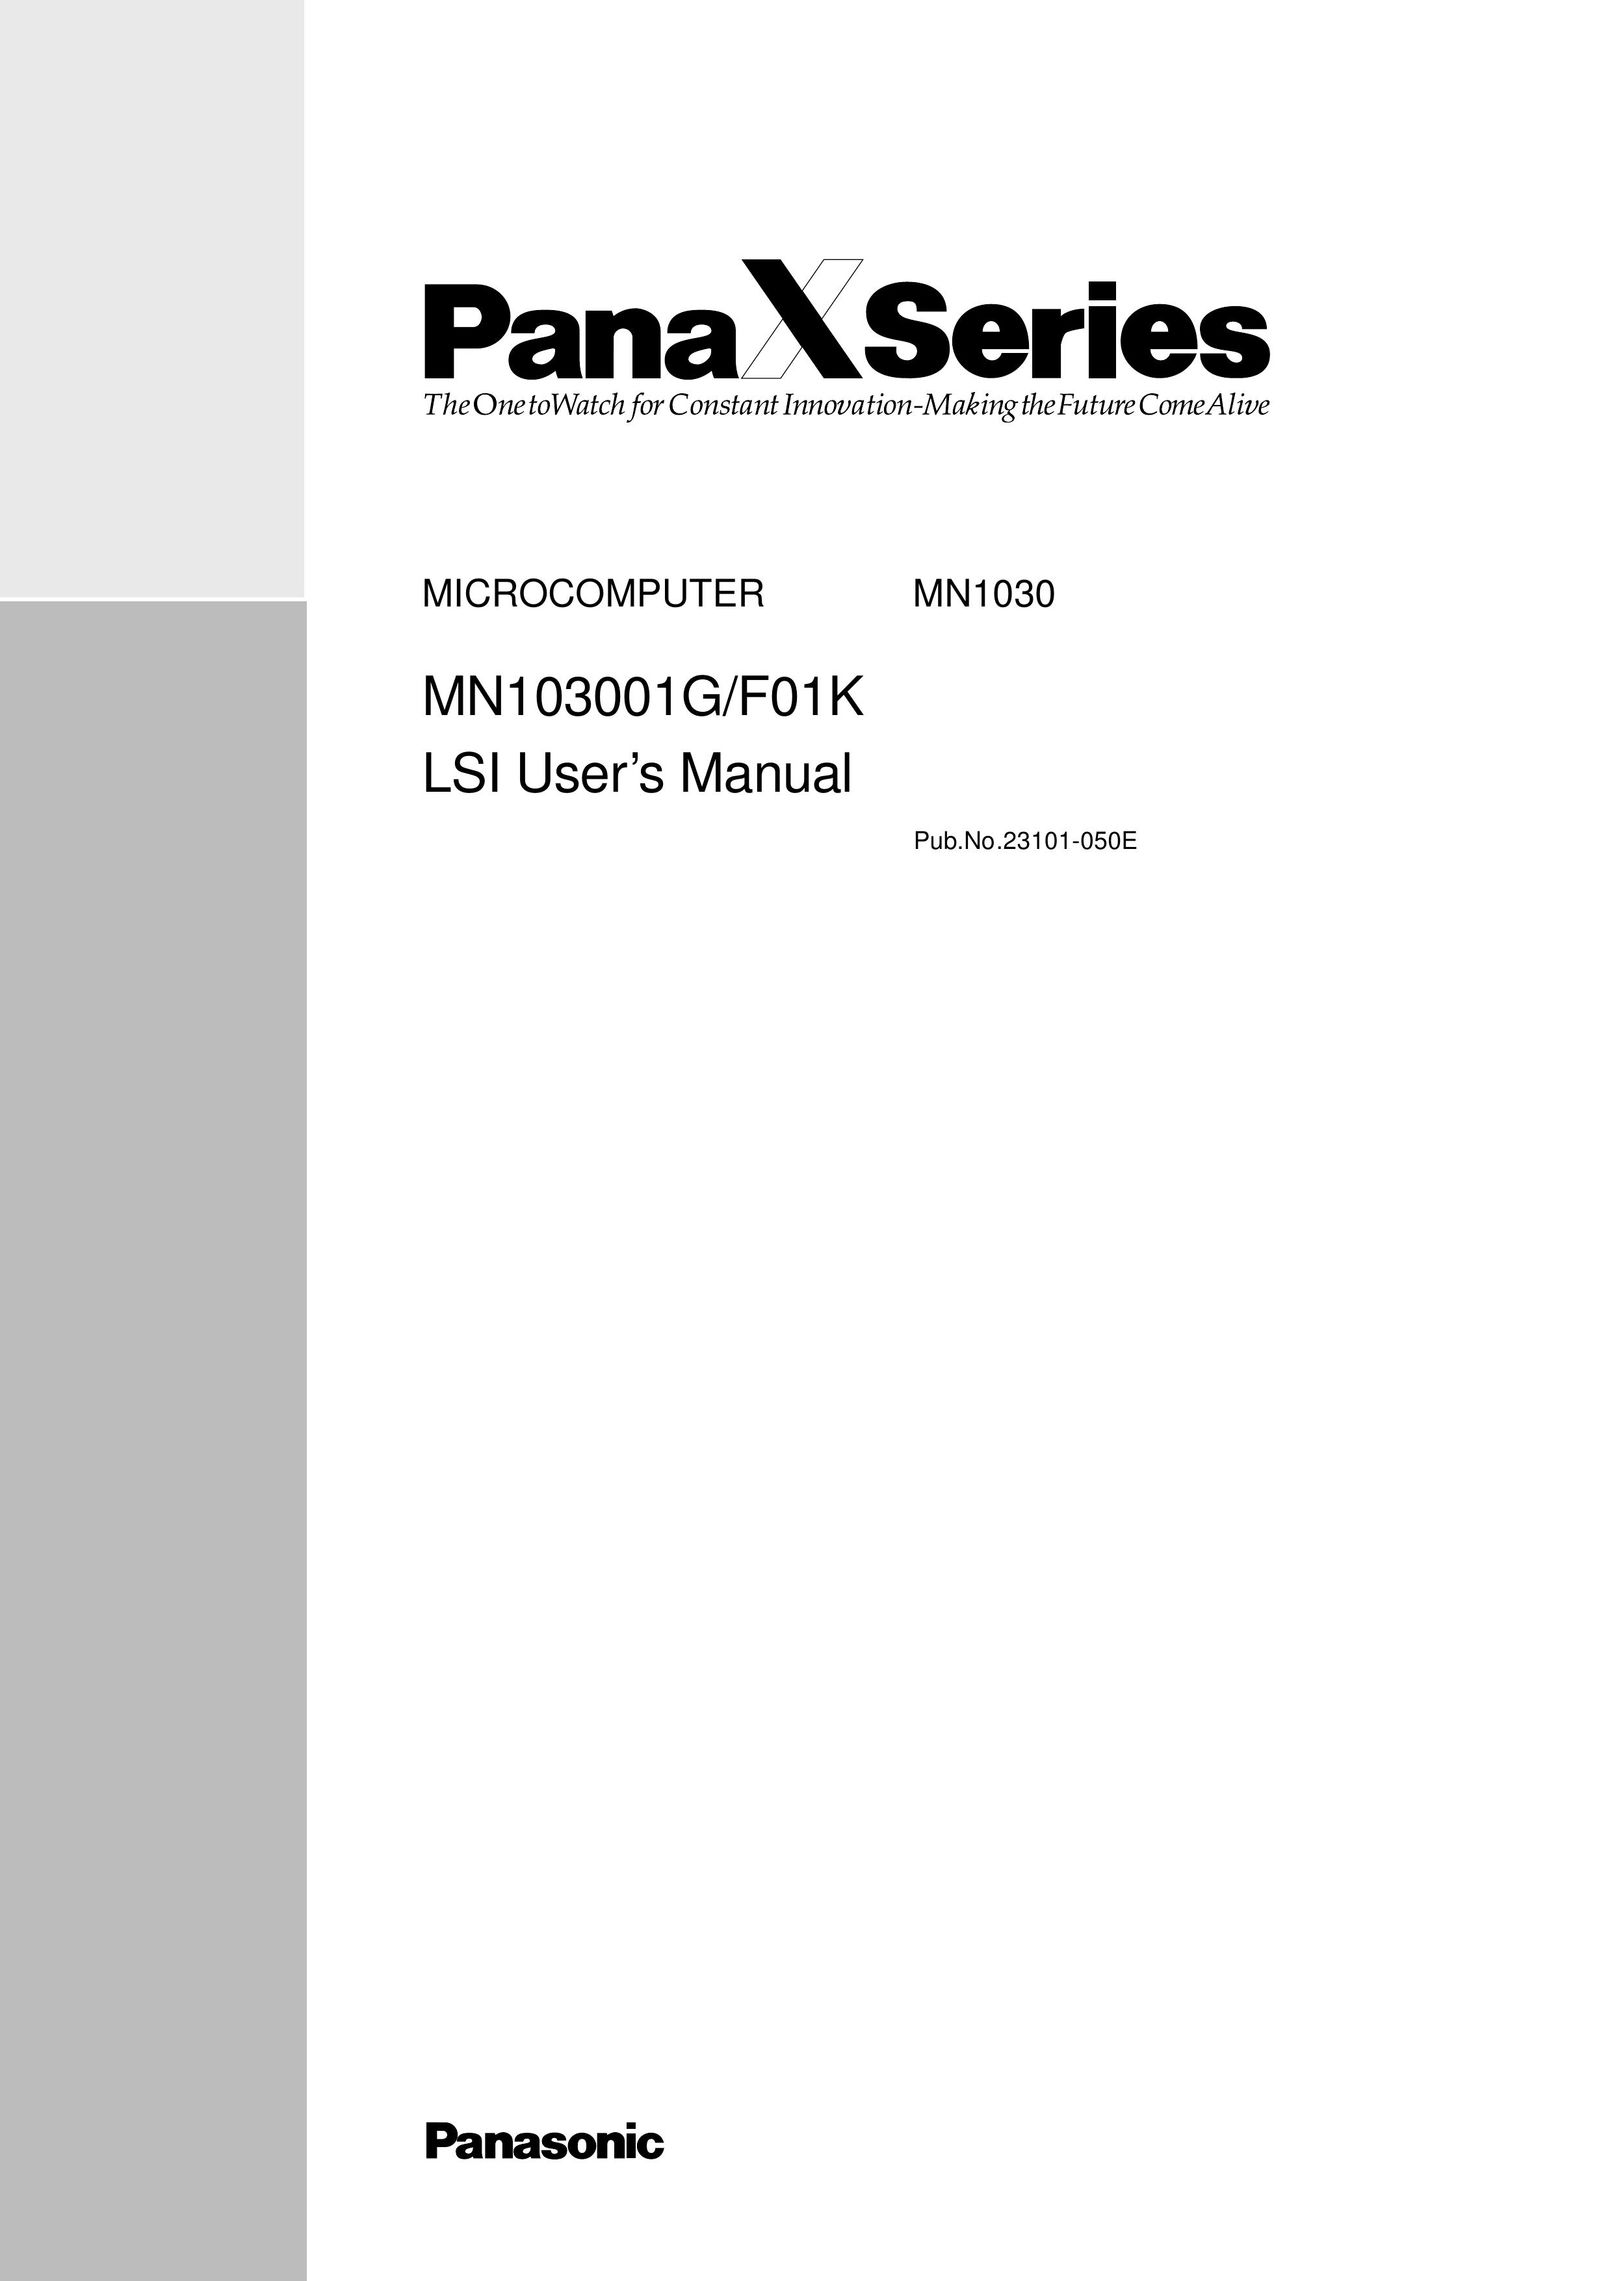 Panasonic MN103001G/F01K Personal Computer User Manual